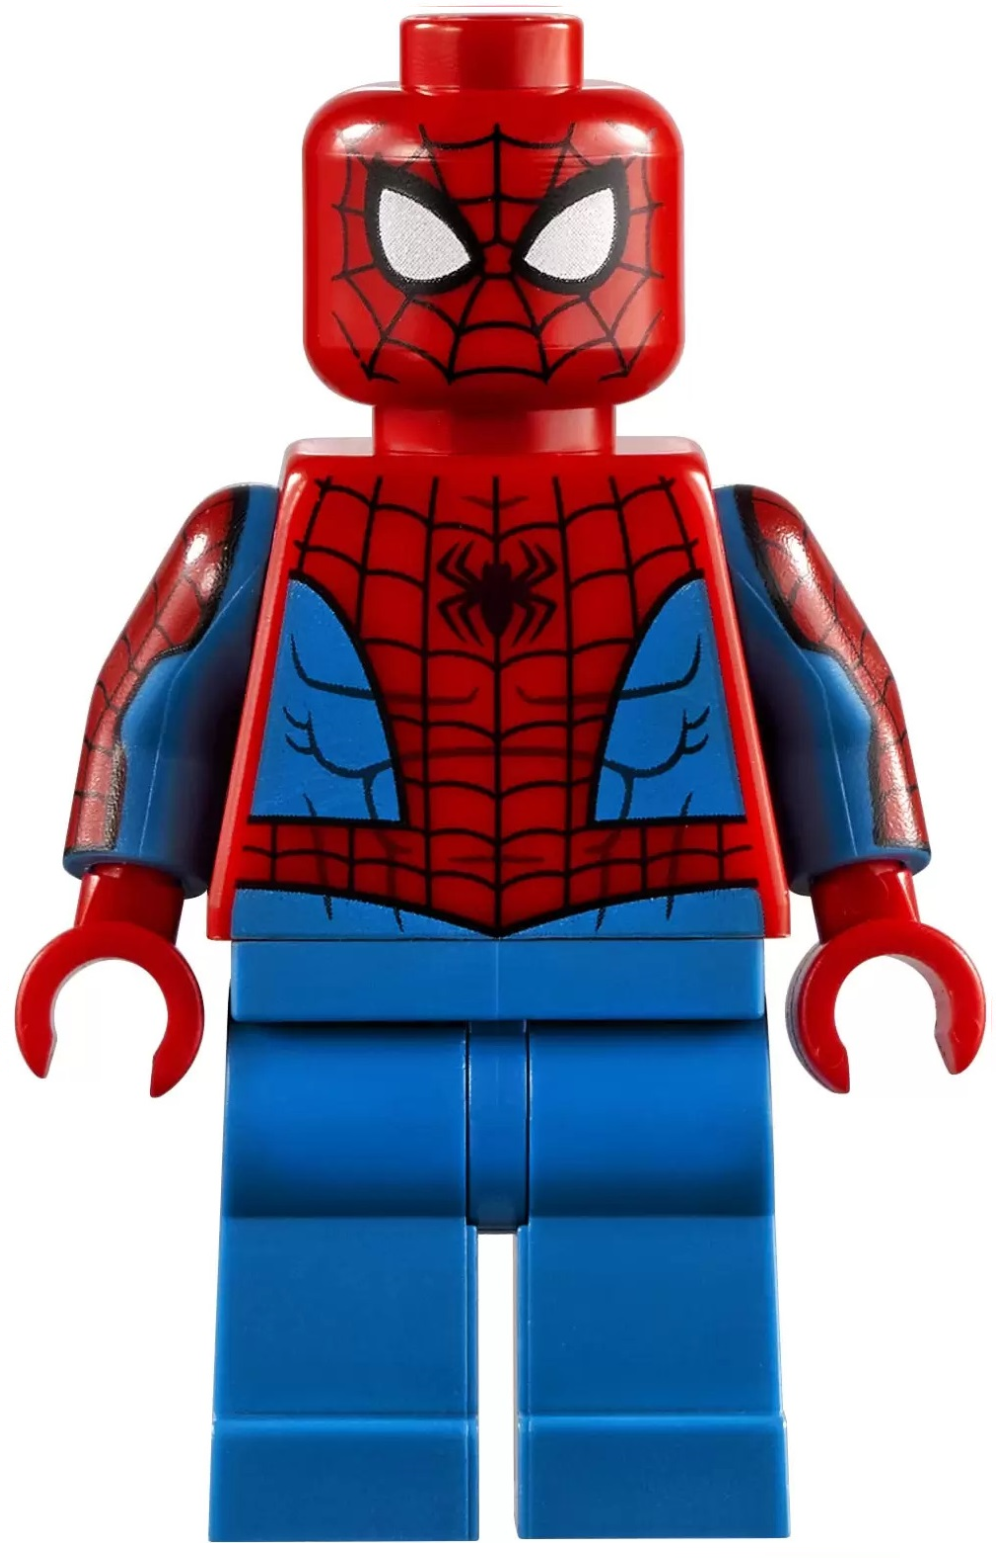 LEGO SUPER HEROES MARVEL ORIGINAL MINIFIGURE MINIFIGURA SPIDER-MAN SET 76058 